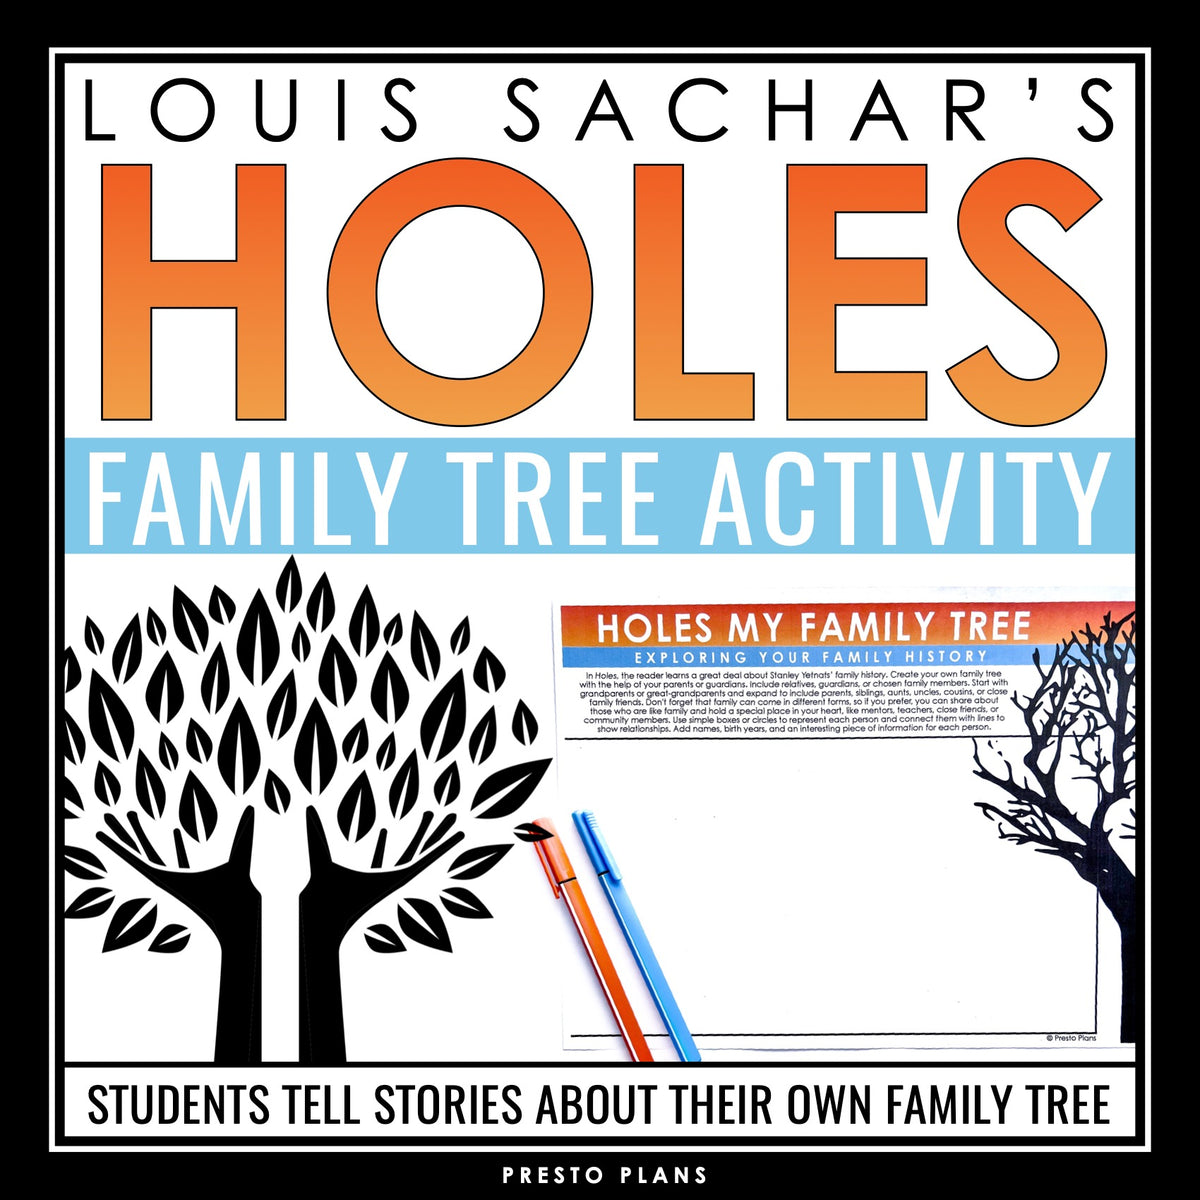 Holes - Class Set: 9781609330217: Louis Sachar - Learning Links